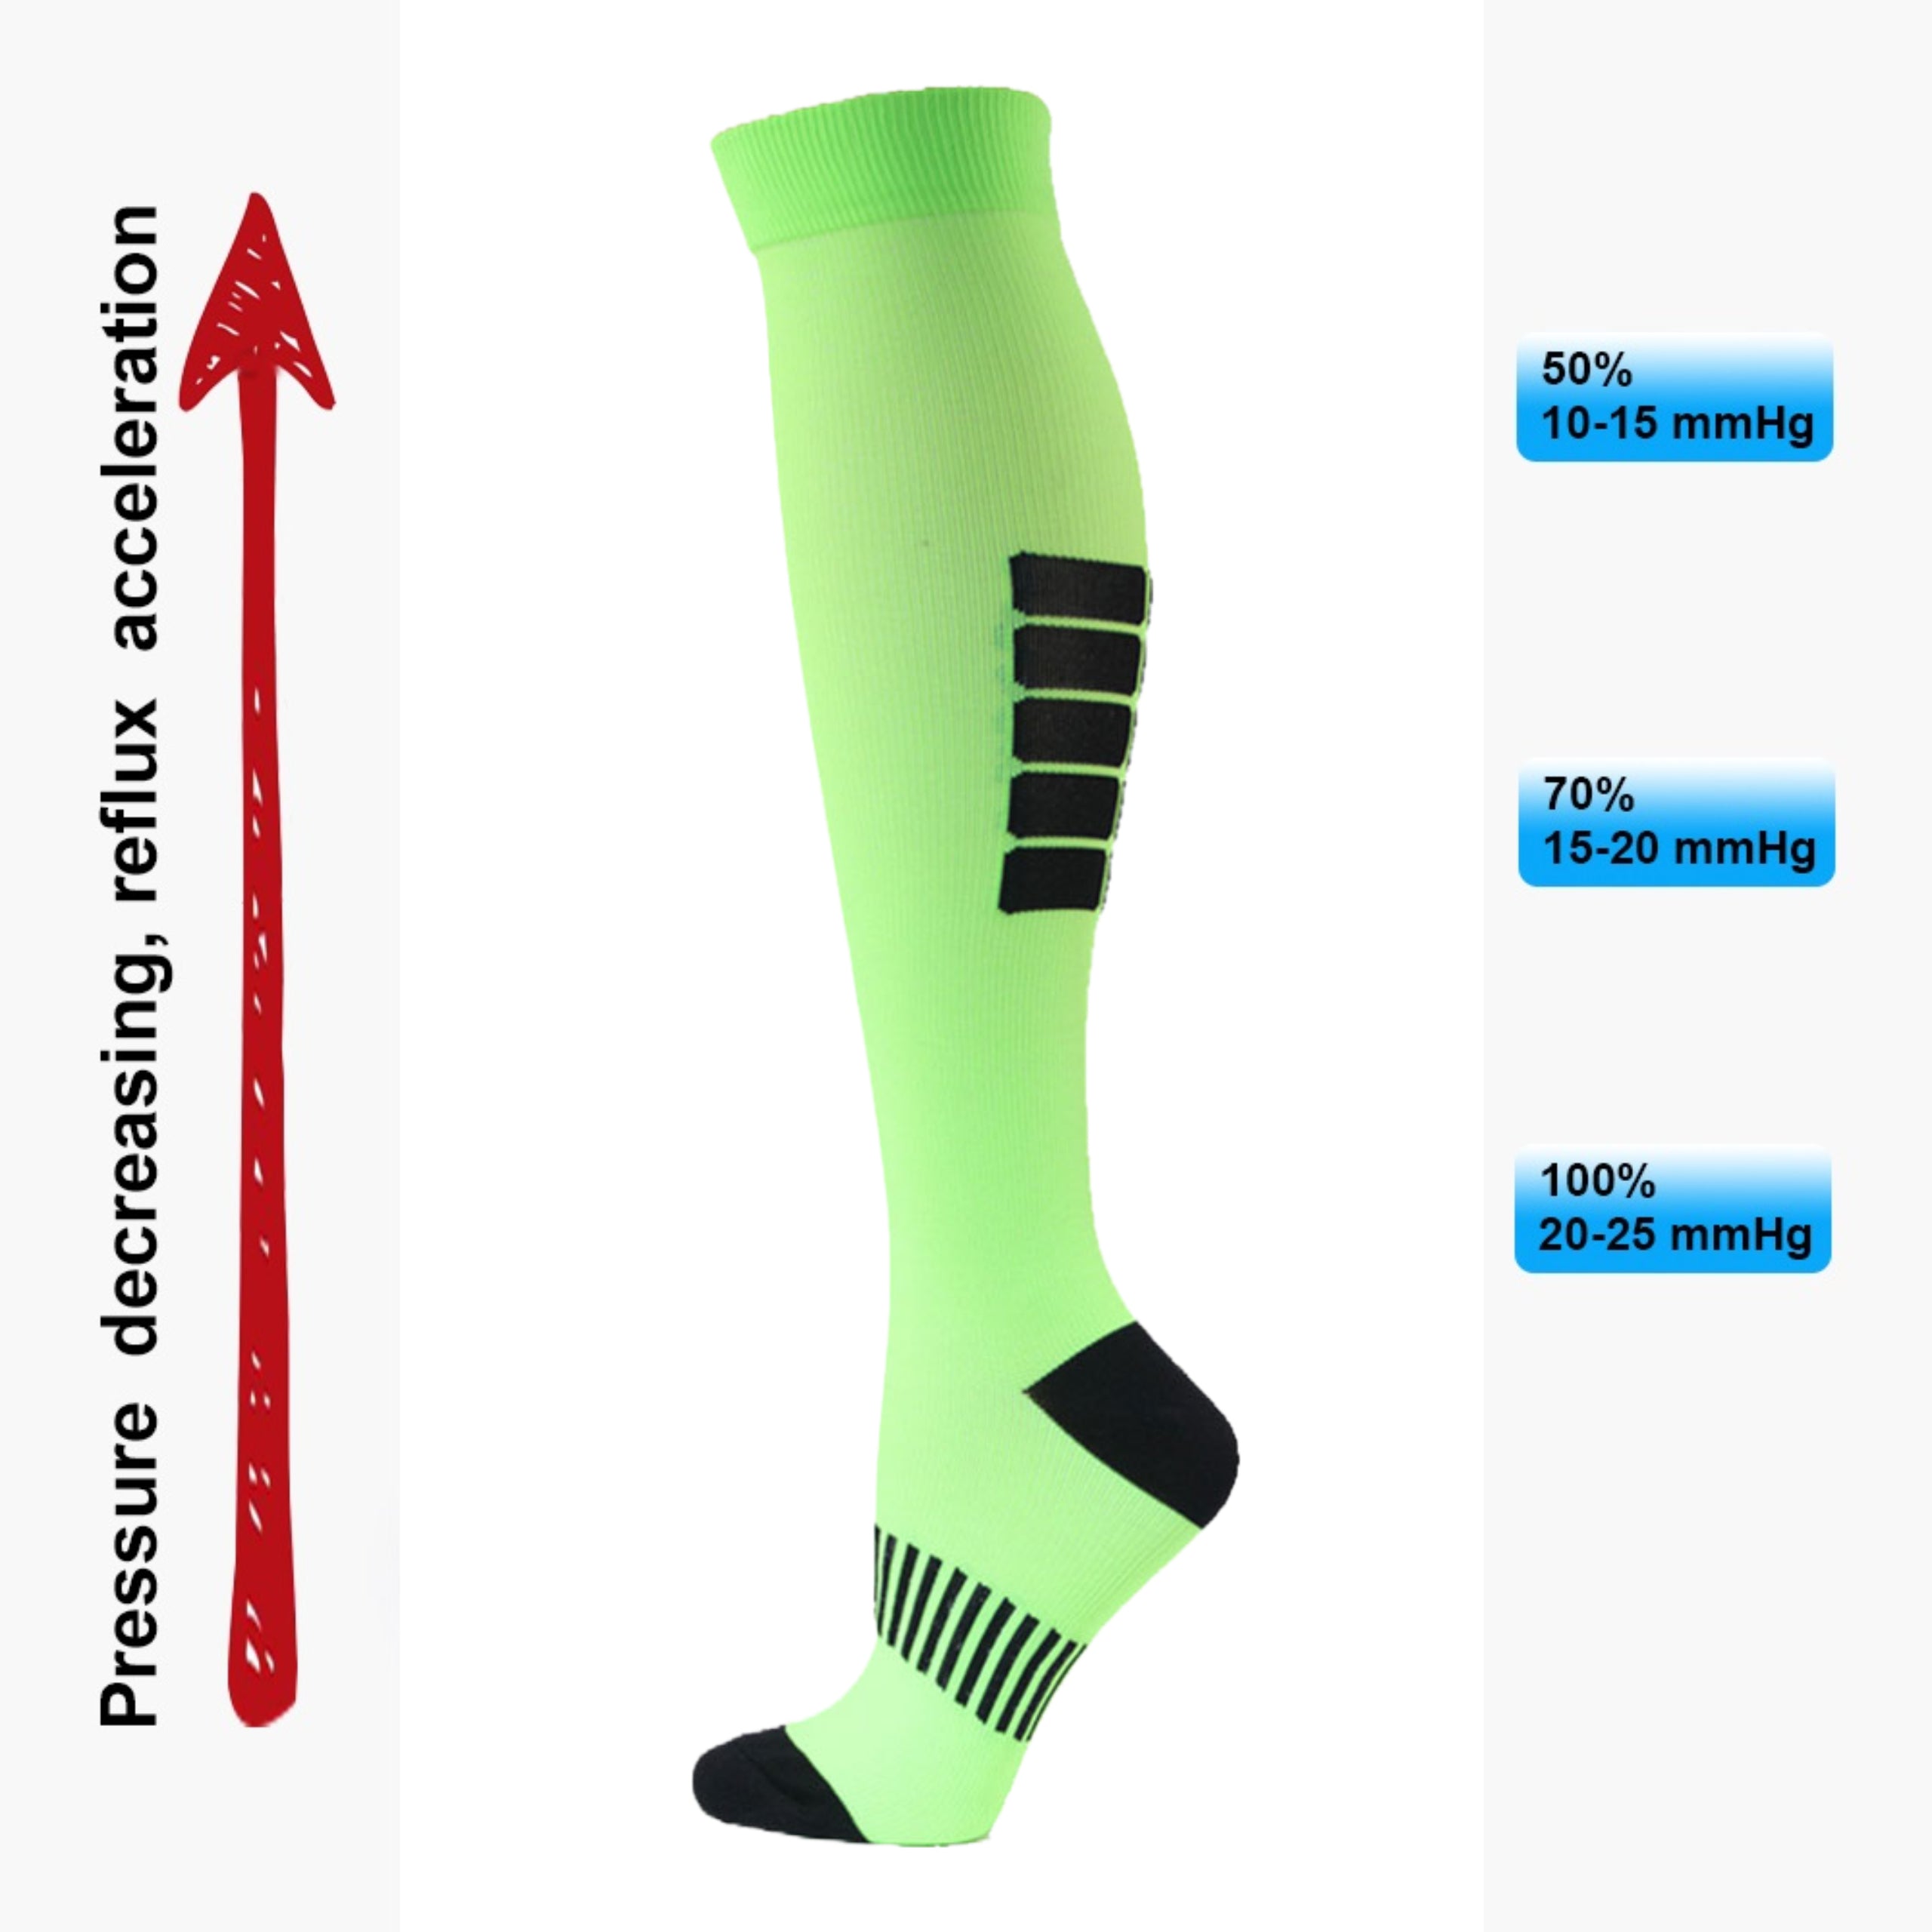 Green Athletic Knee High (Compression Socks)